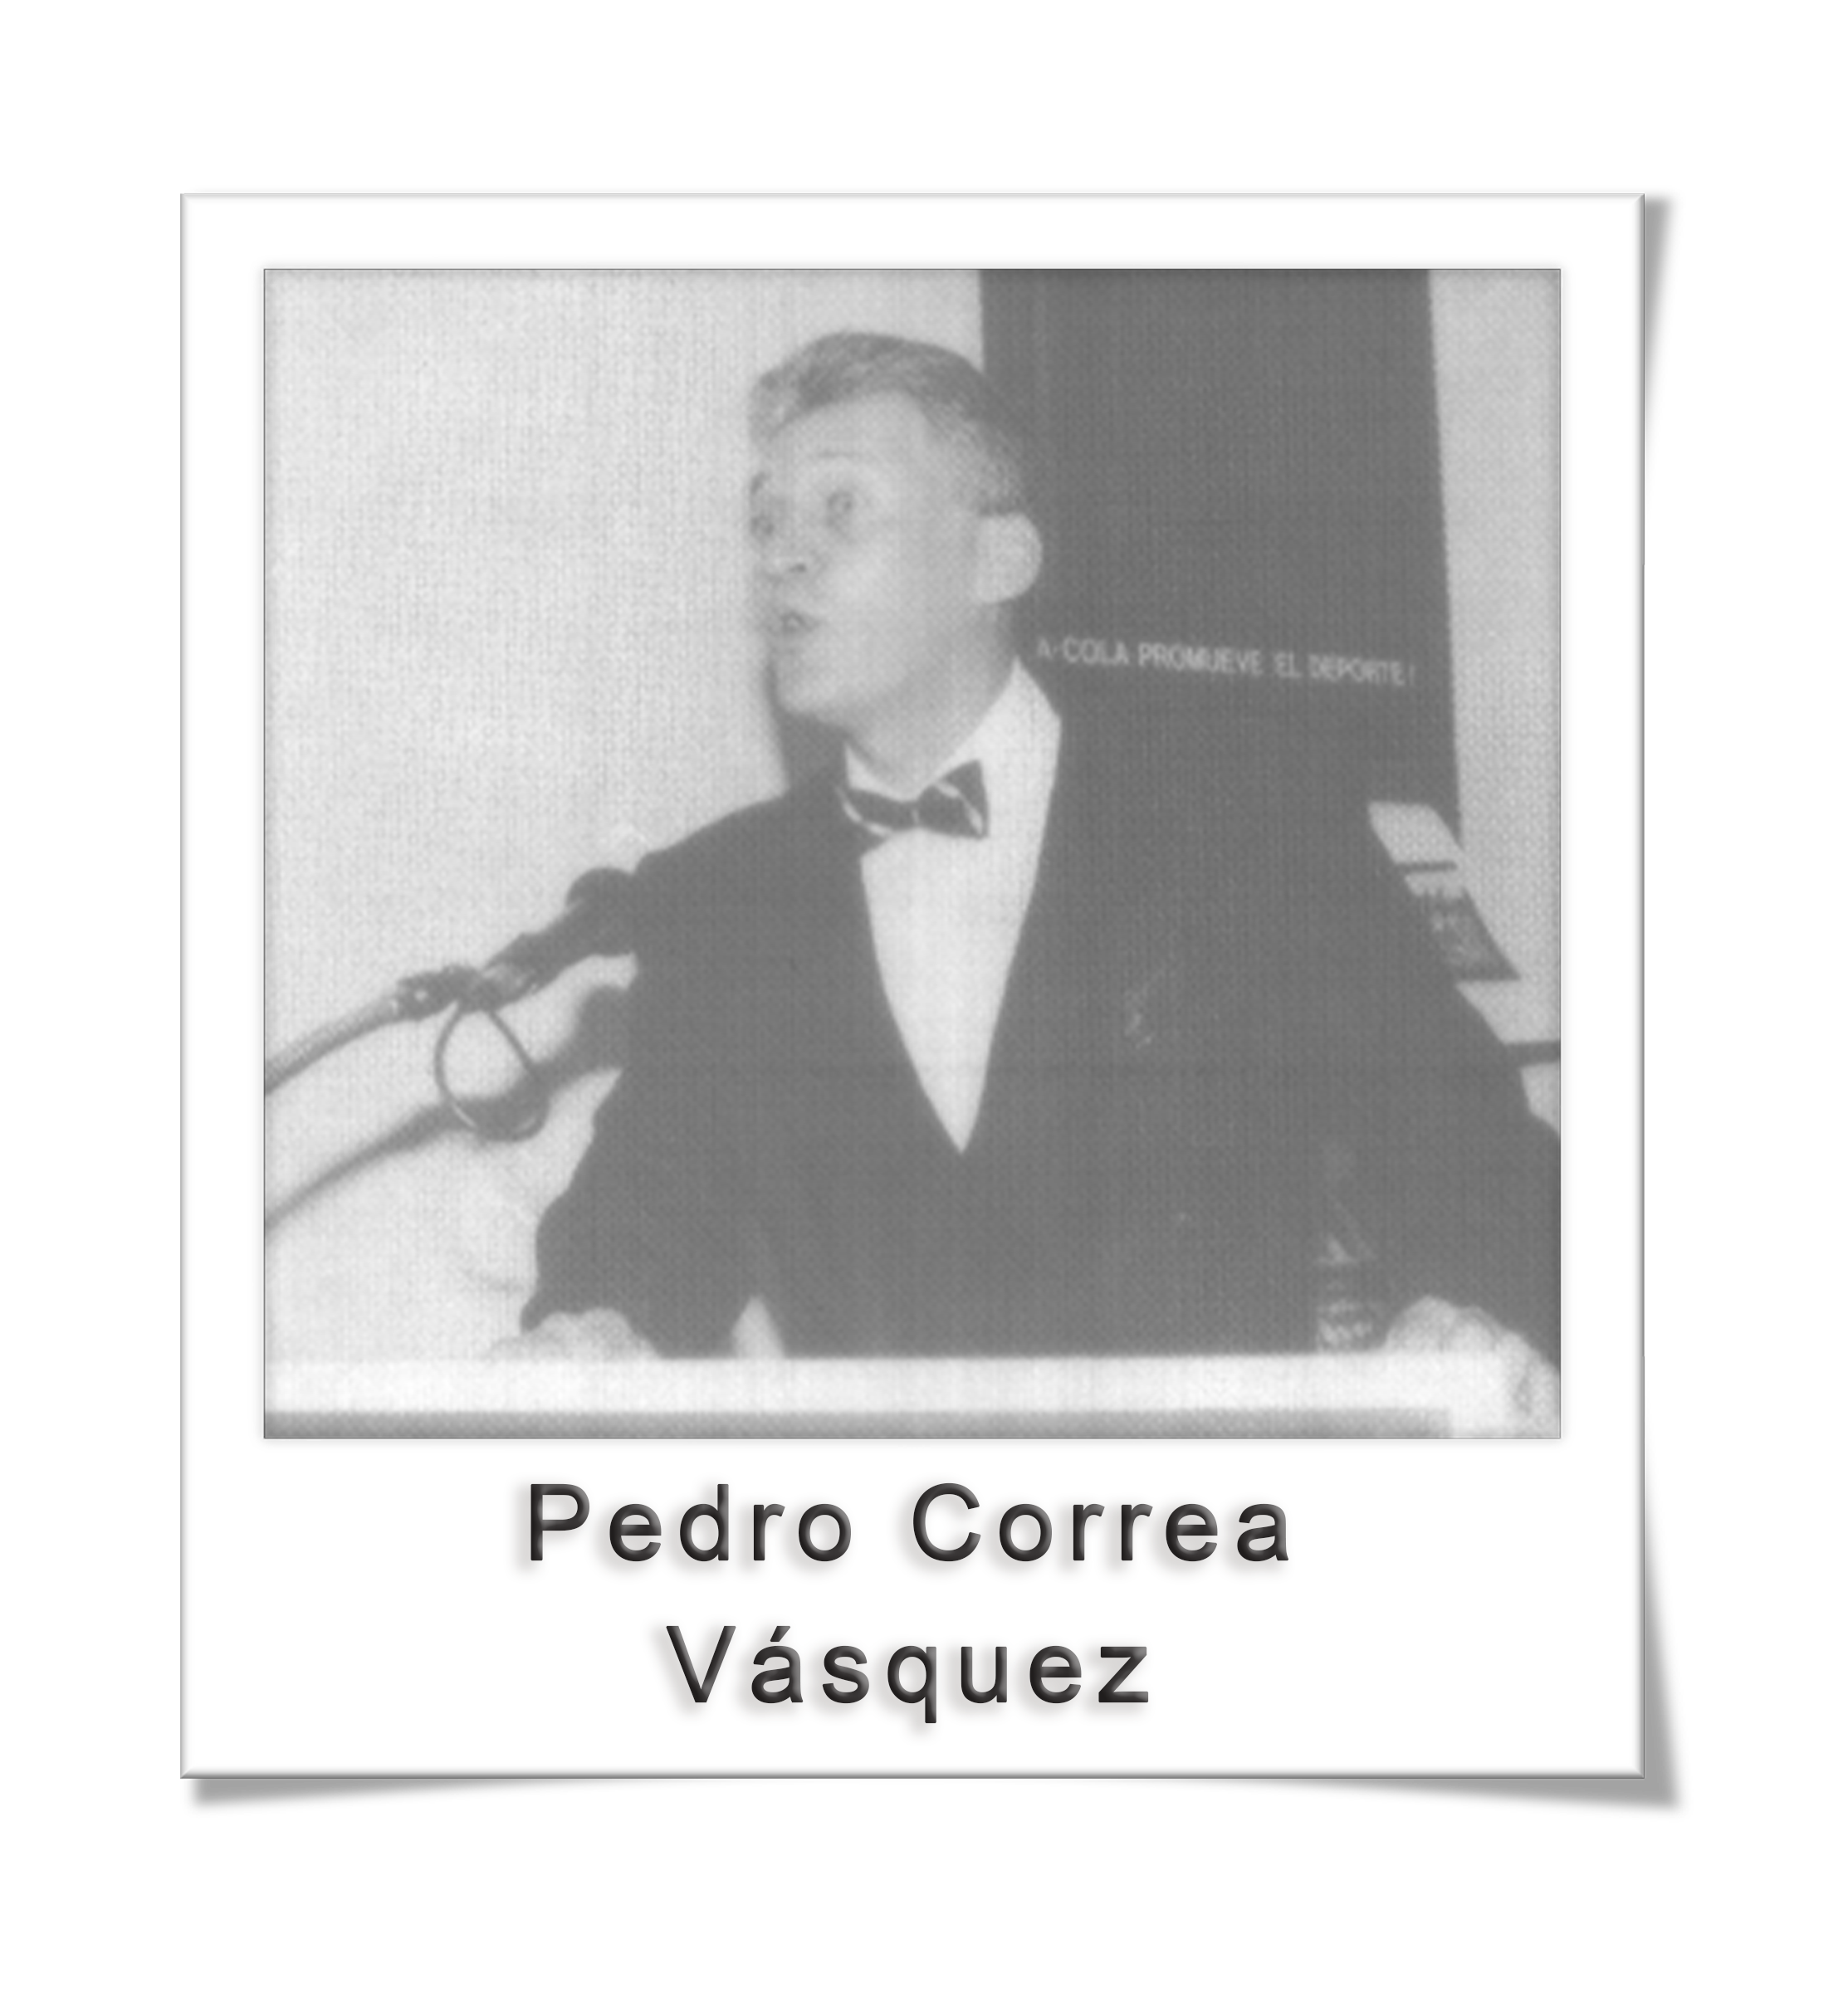 Pedro Correa Vásquez